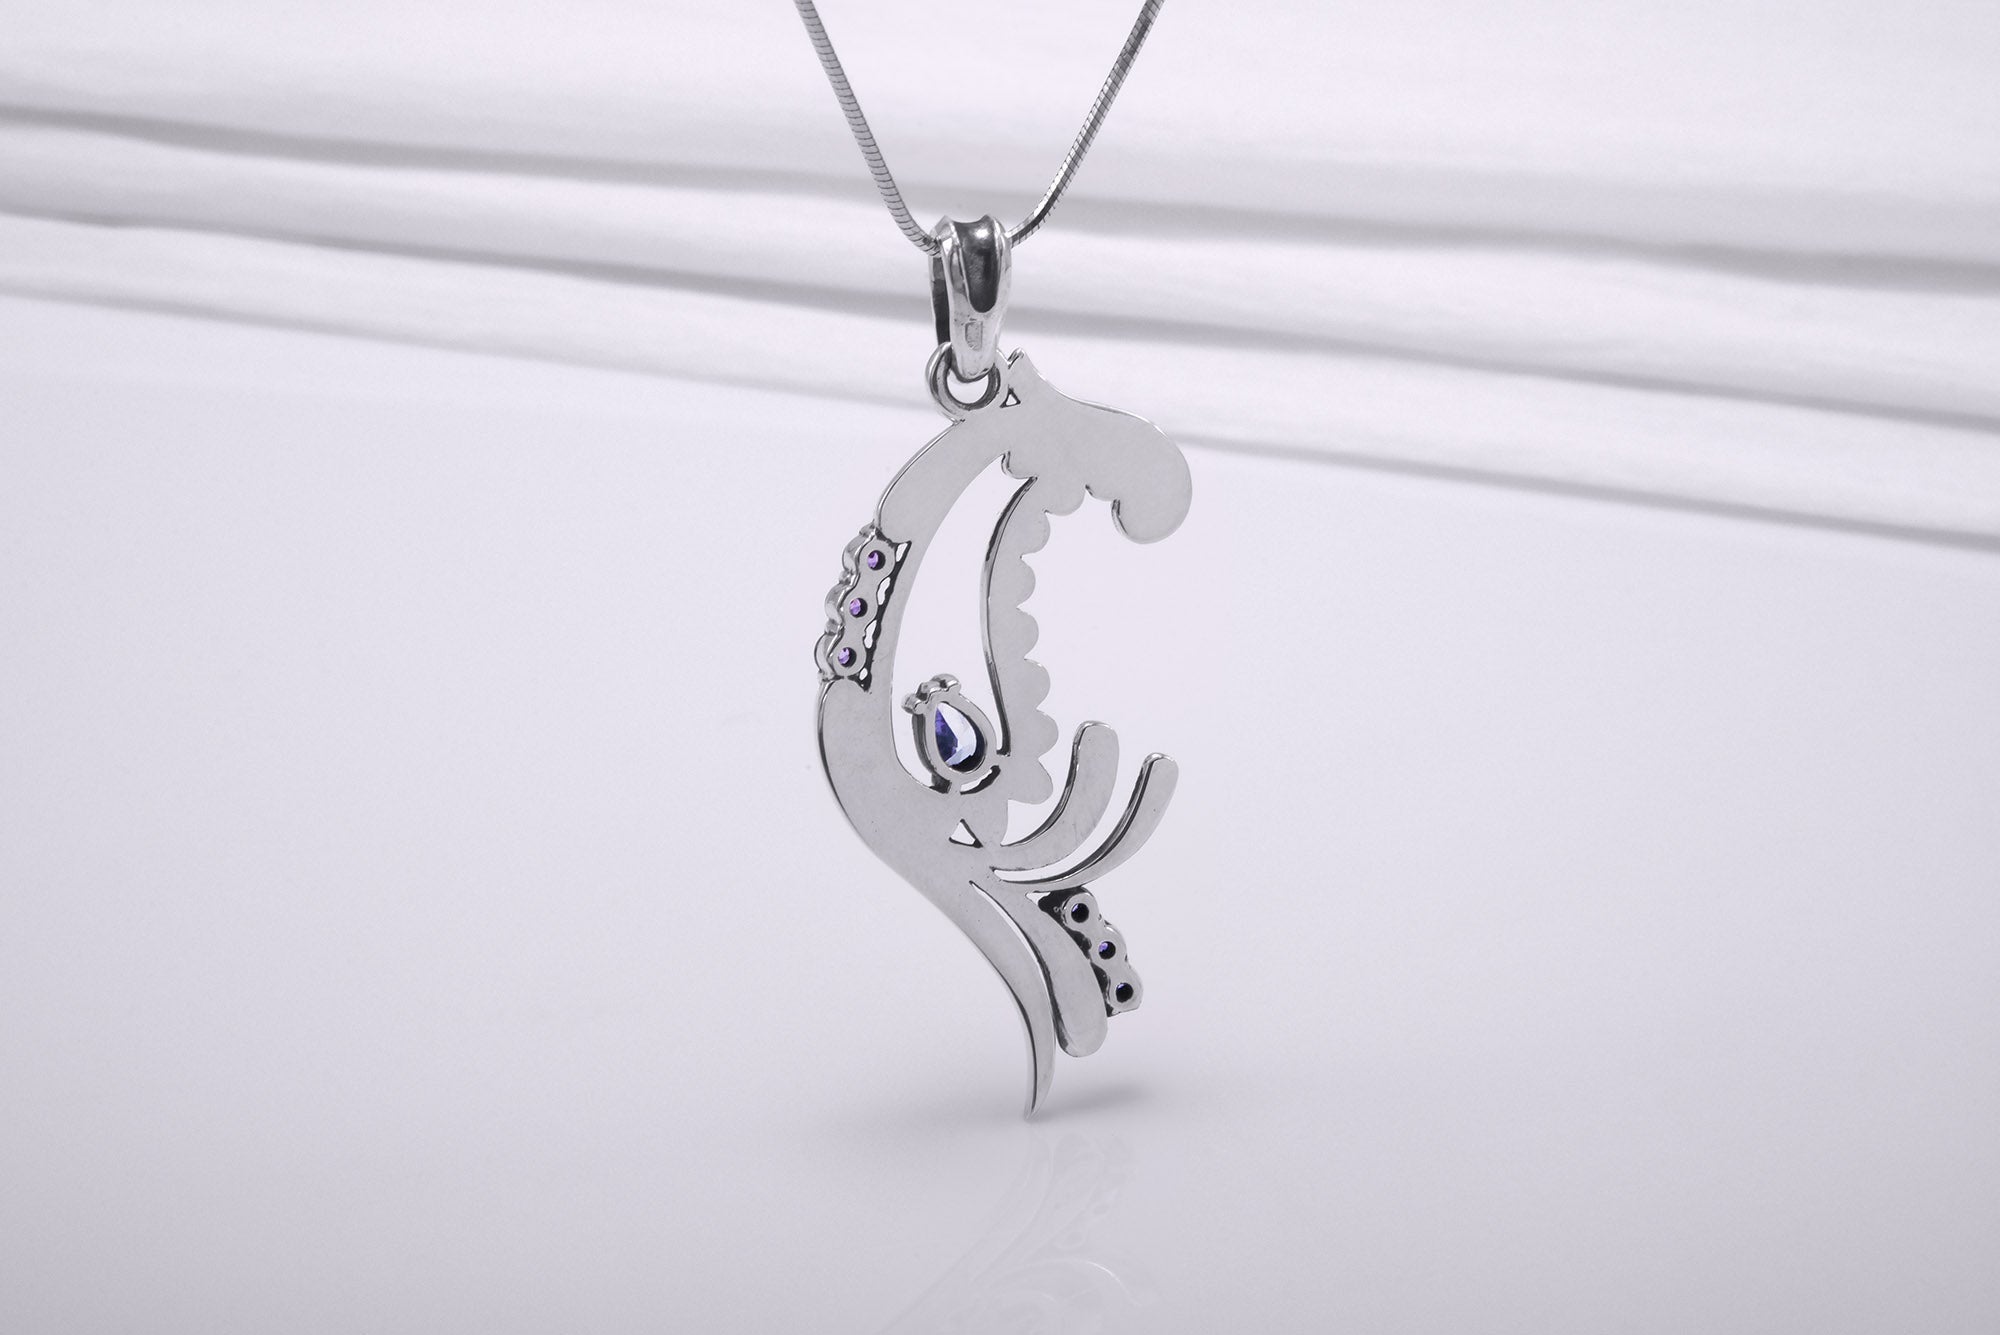 925 Silver Paisley Pattern Pendant with Gems, Handmade Fashion Jewelry - vikingworkshop